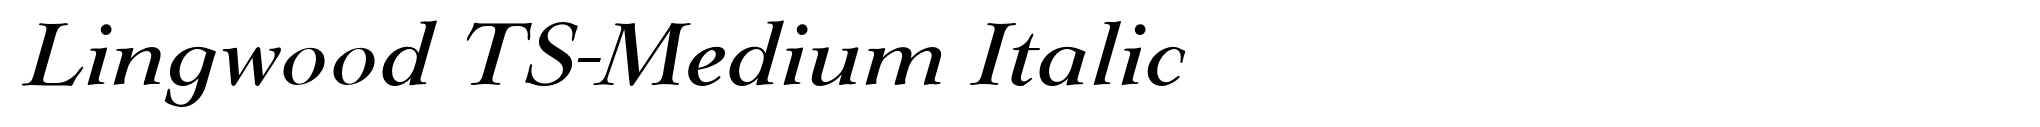 Lingwood TS-Medium Italic image